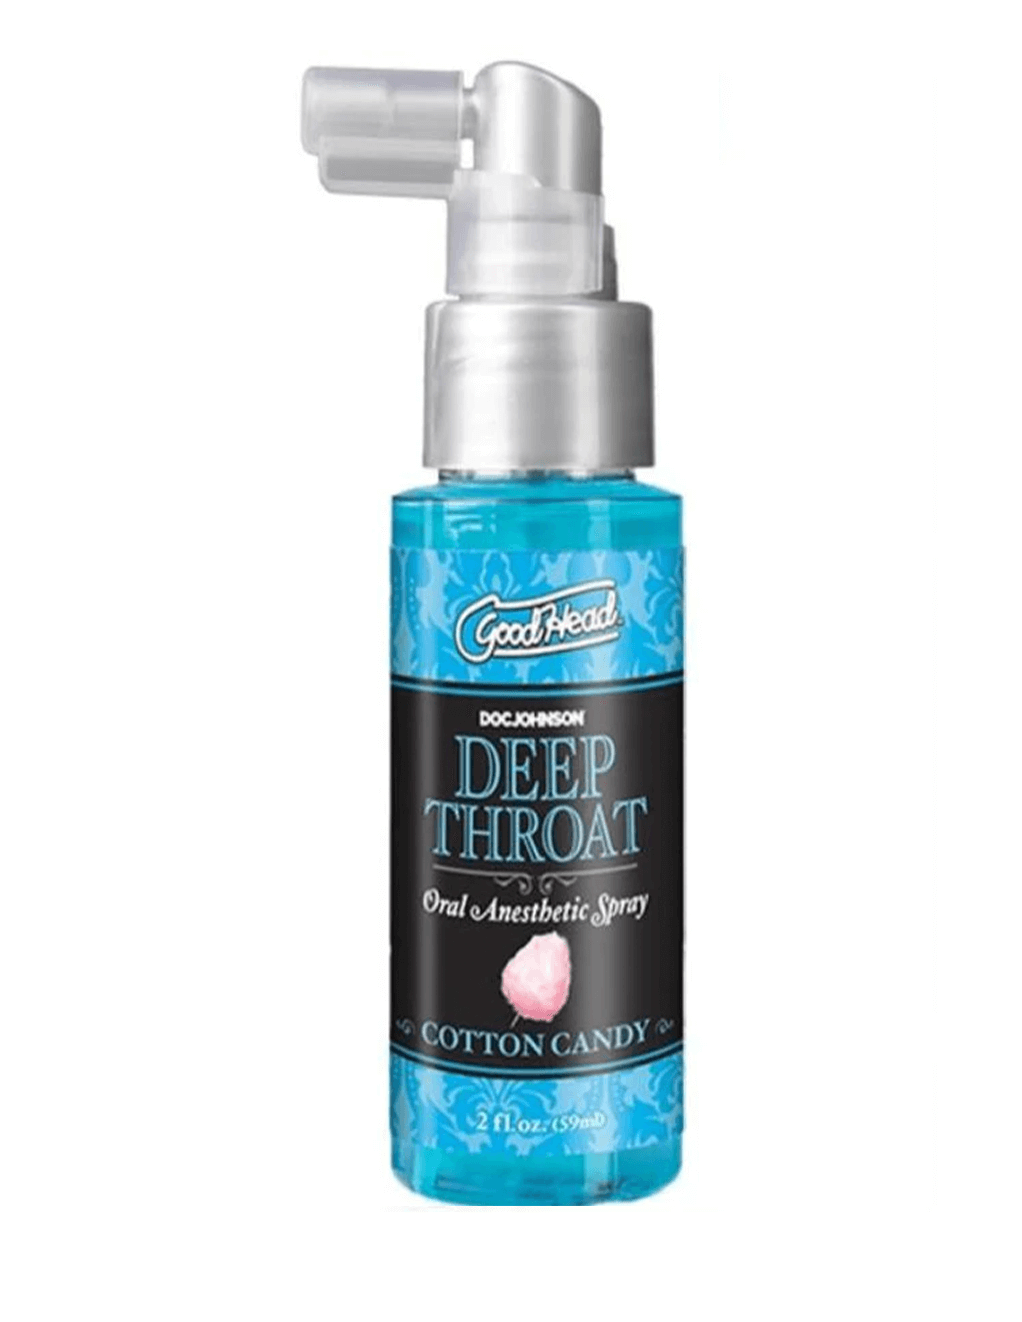 Goodhead Deep Throat Desensitizing Spray 2 oz Cotton Candy